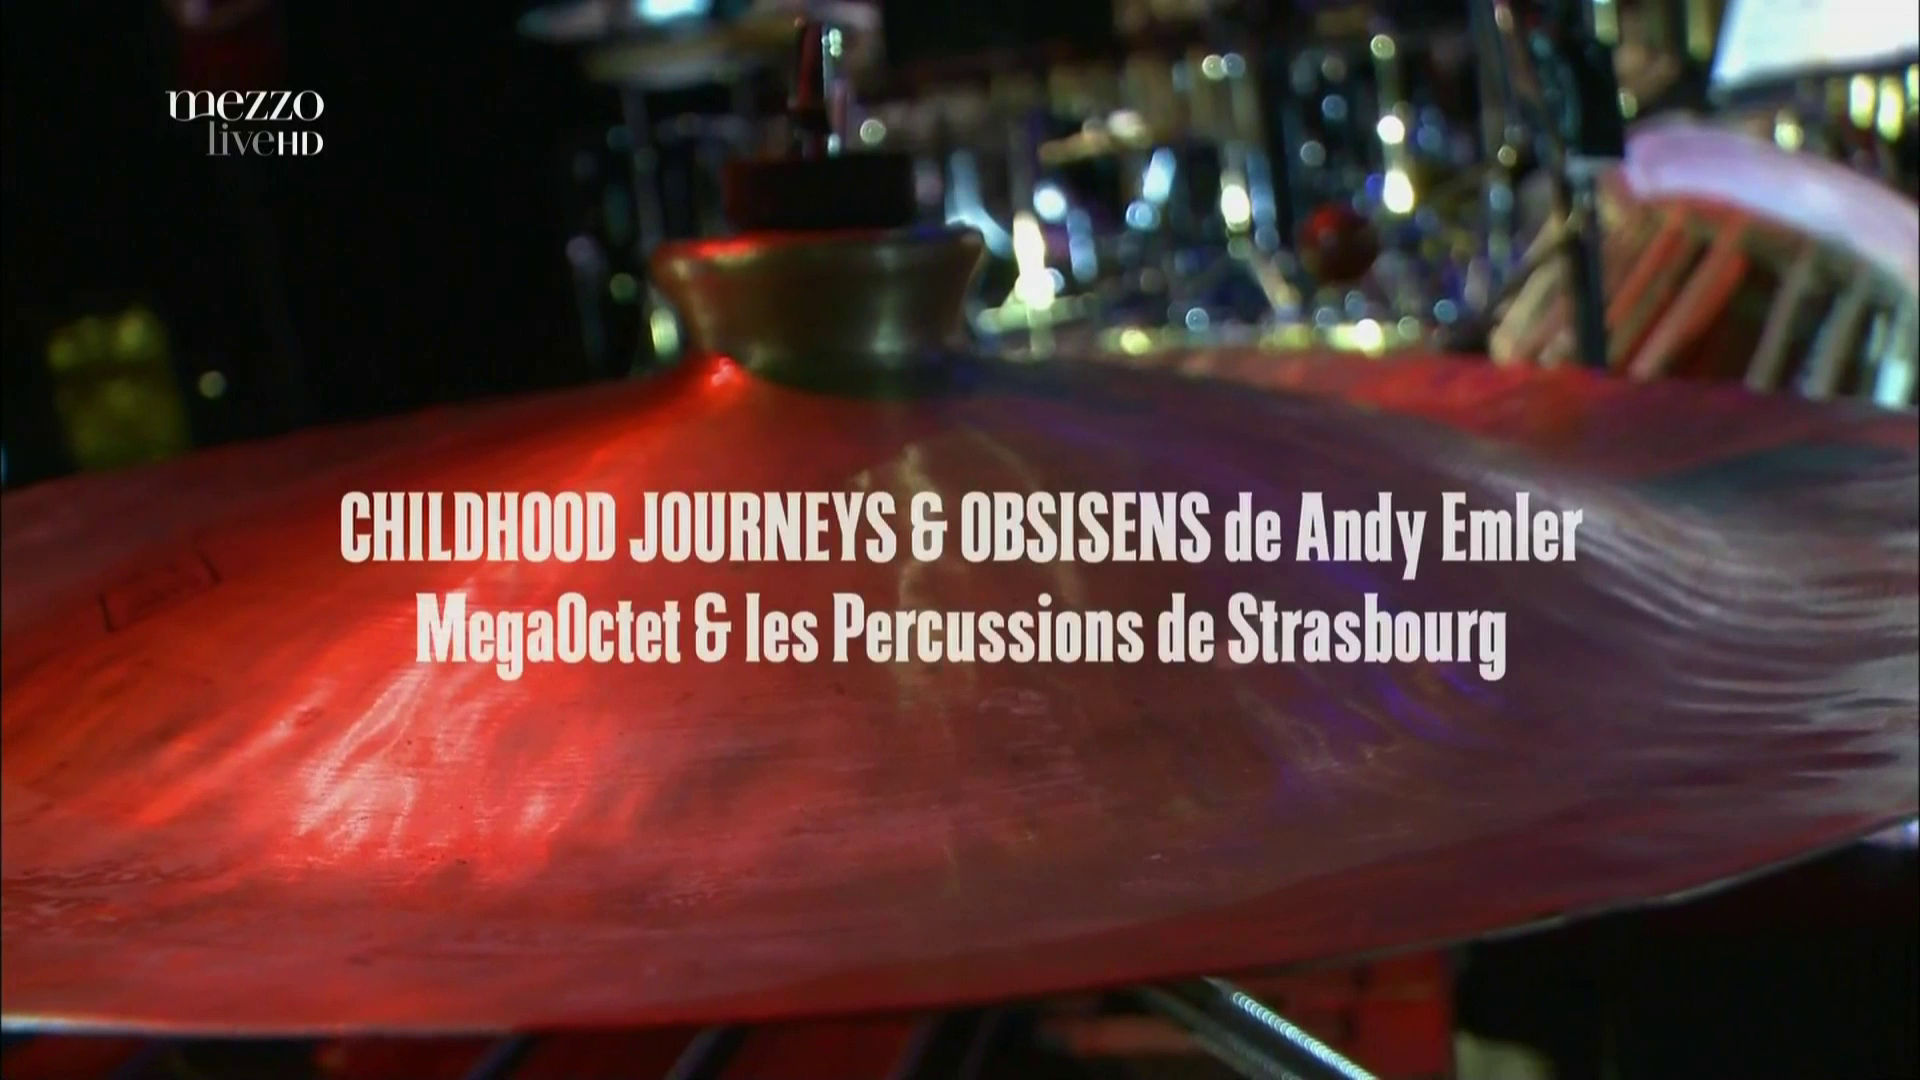 2012 Childhood Journeys & Obsisens de Andy Emler, MegaOctet & les Perccussions de Strasbourg - Live at Jazzdor Festival [HDTV 1080p] 0